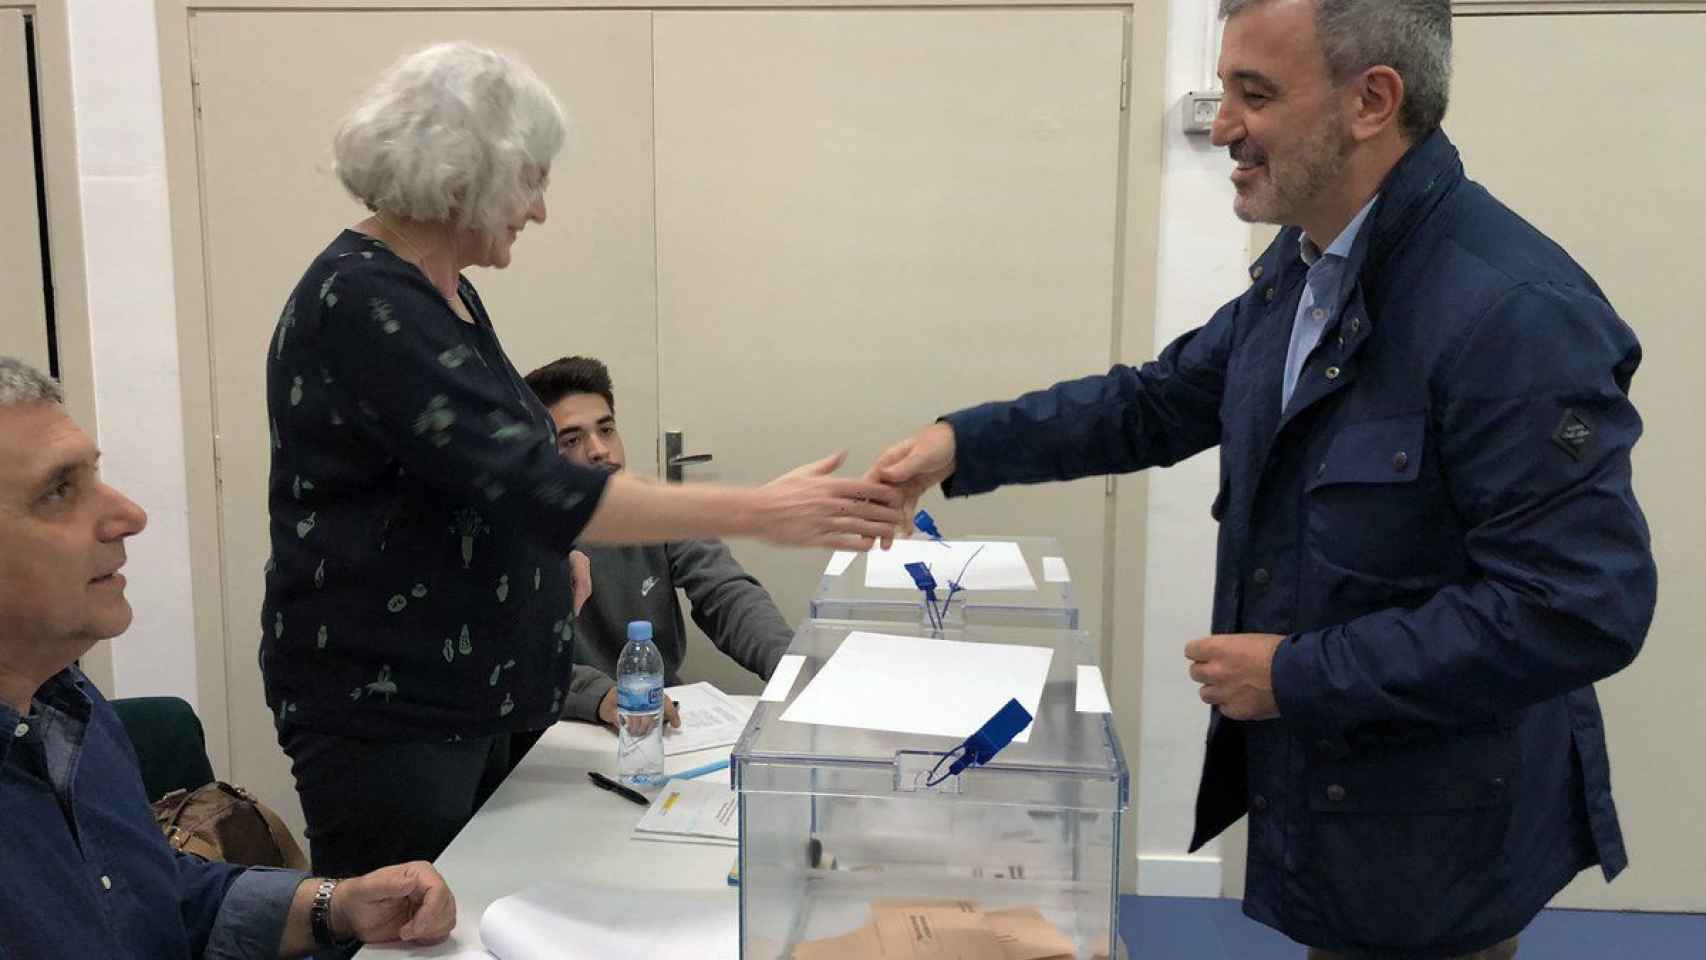 El concejal del PSC Jaume collboni vota, este domingo, en las elecciones generales / TWITTER JAUME COLLBONI